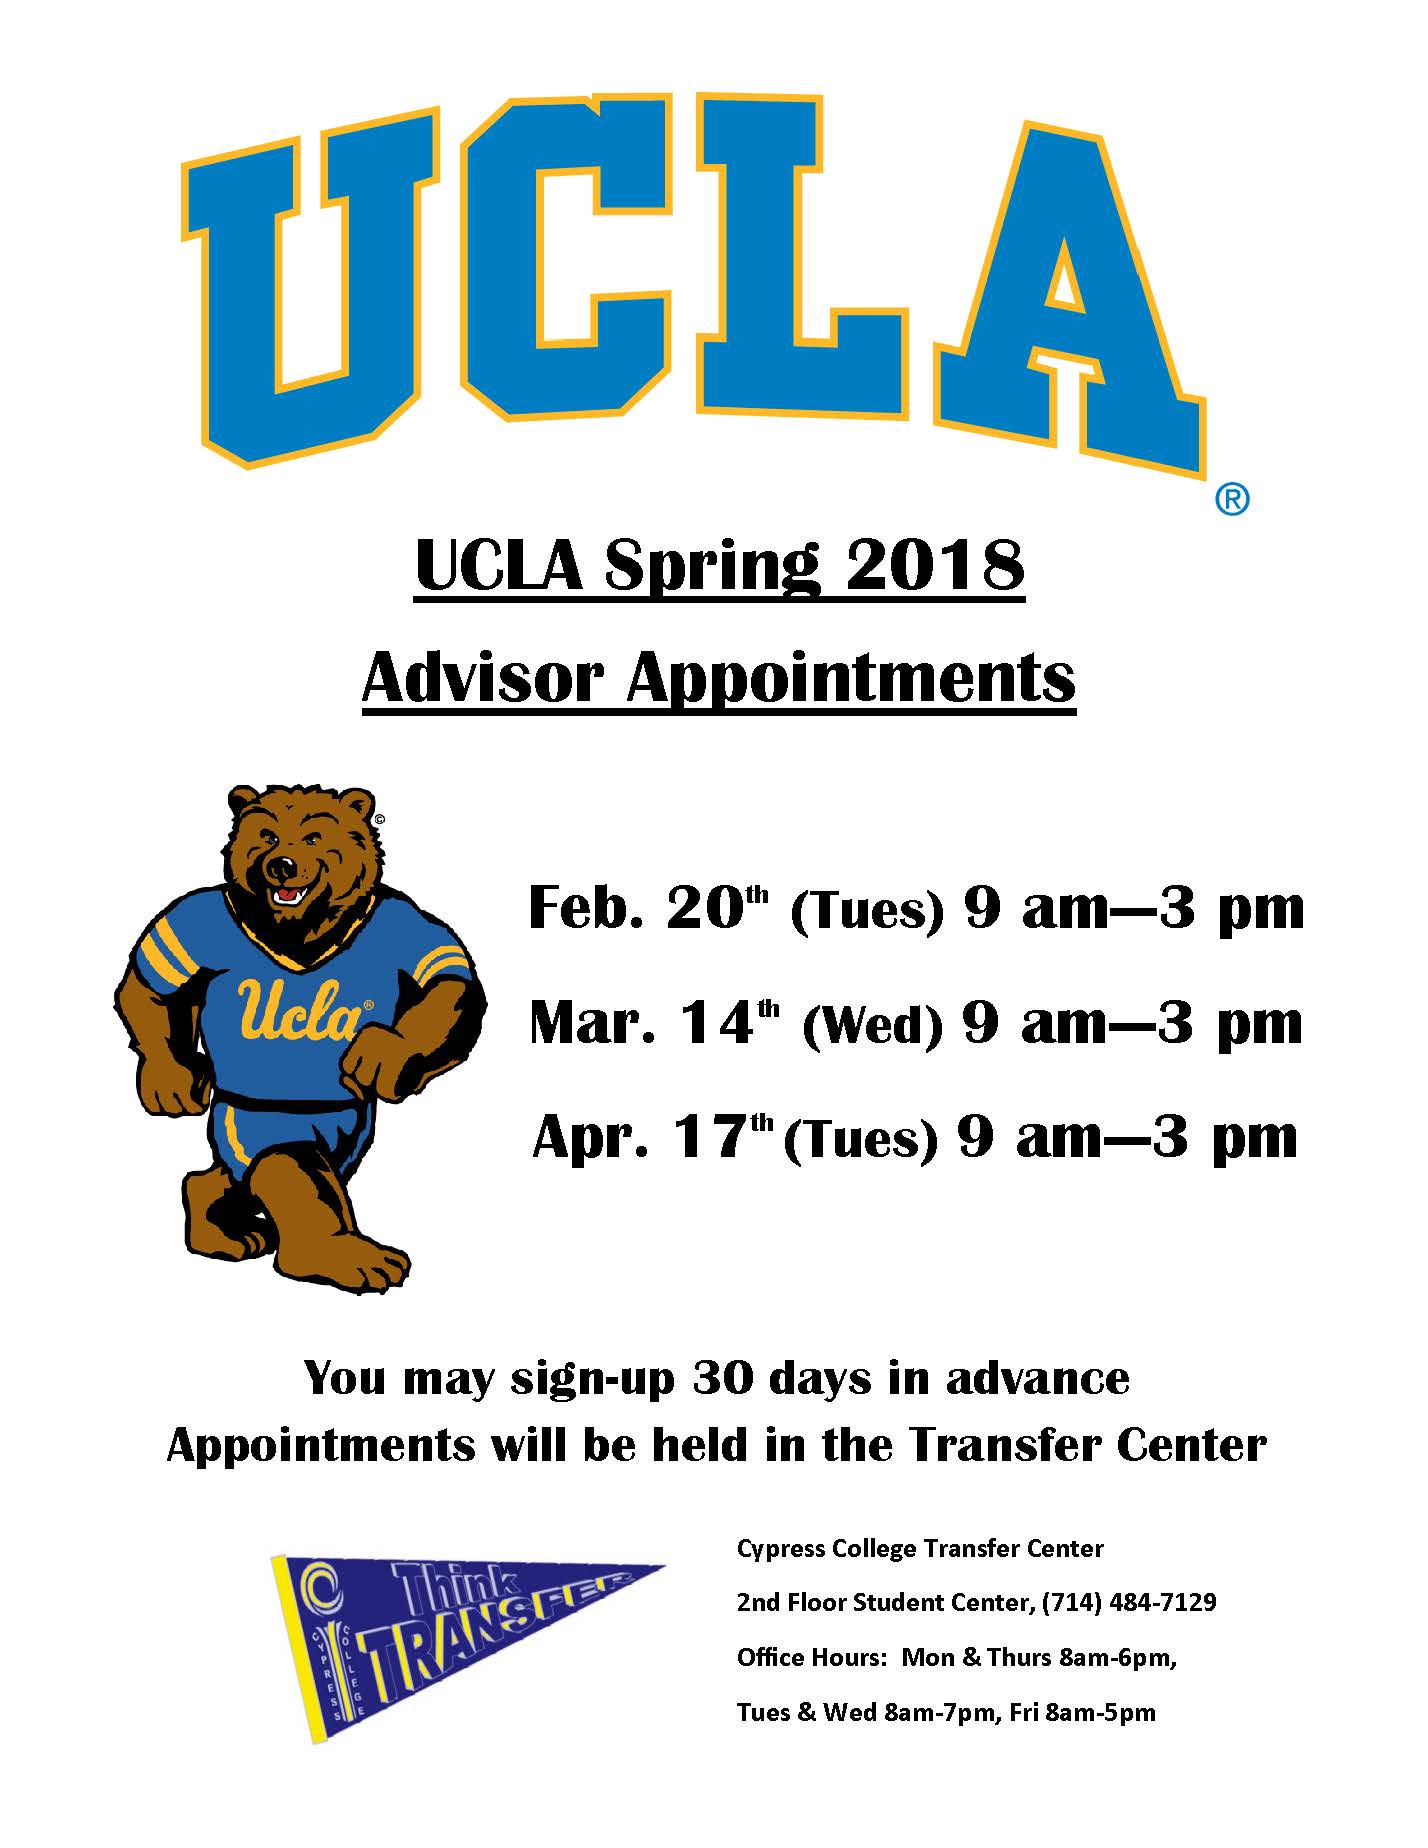 UCLA Advisor appointments